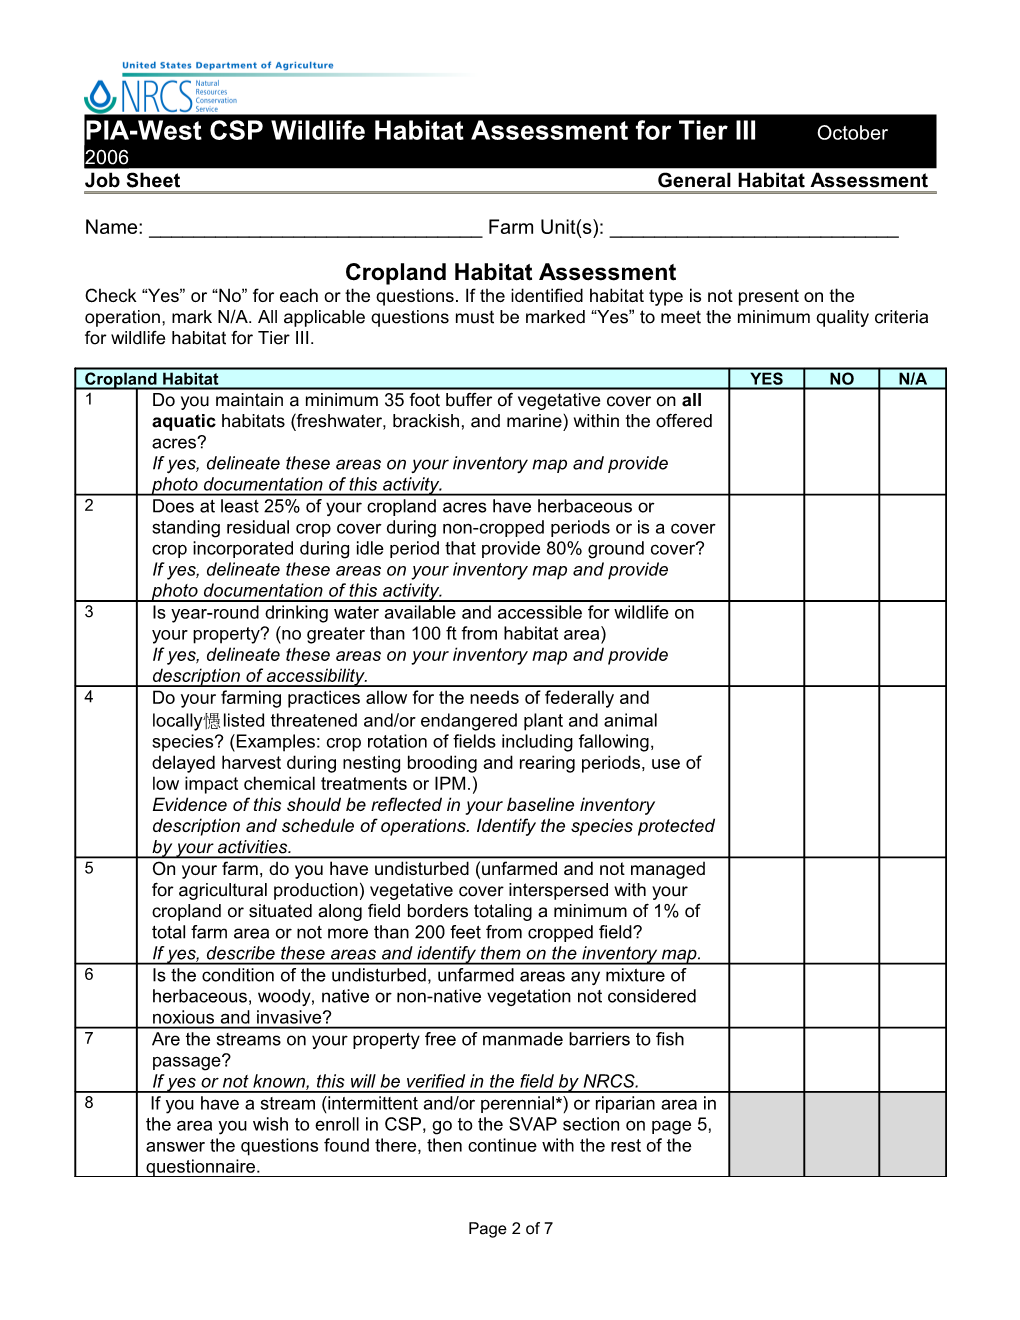 Job Sheet General Habitat Assessment